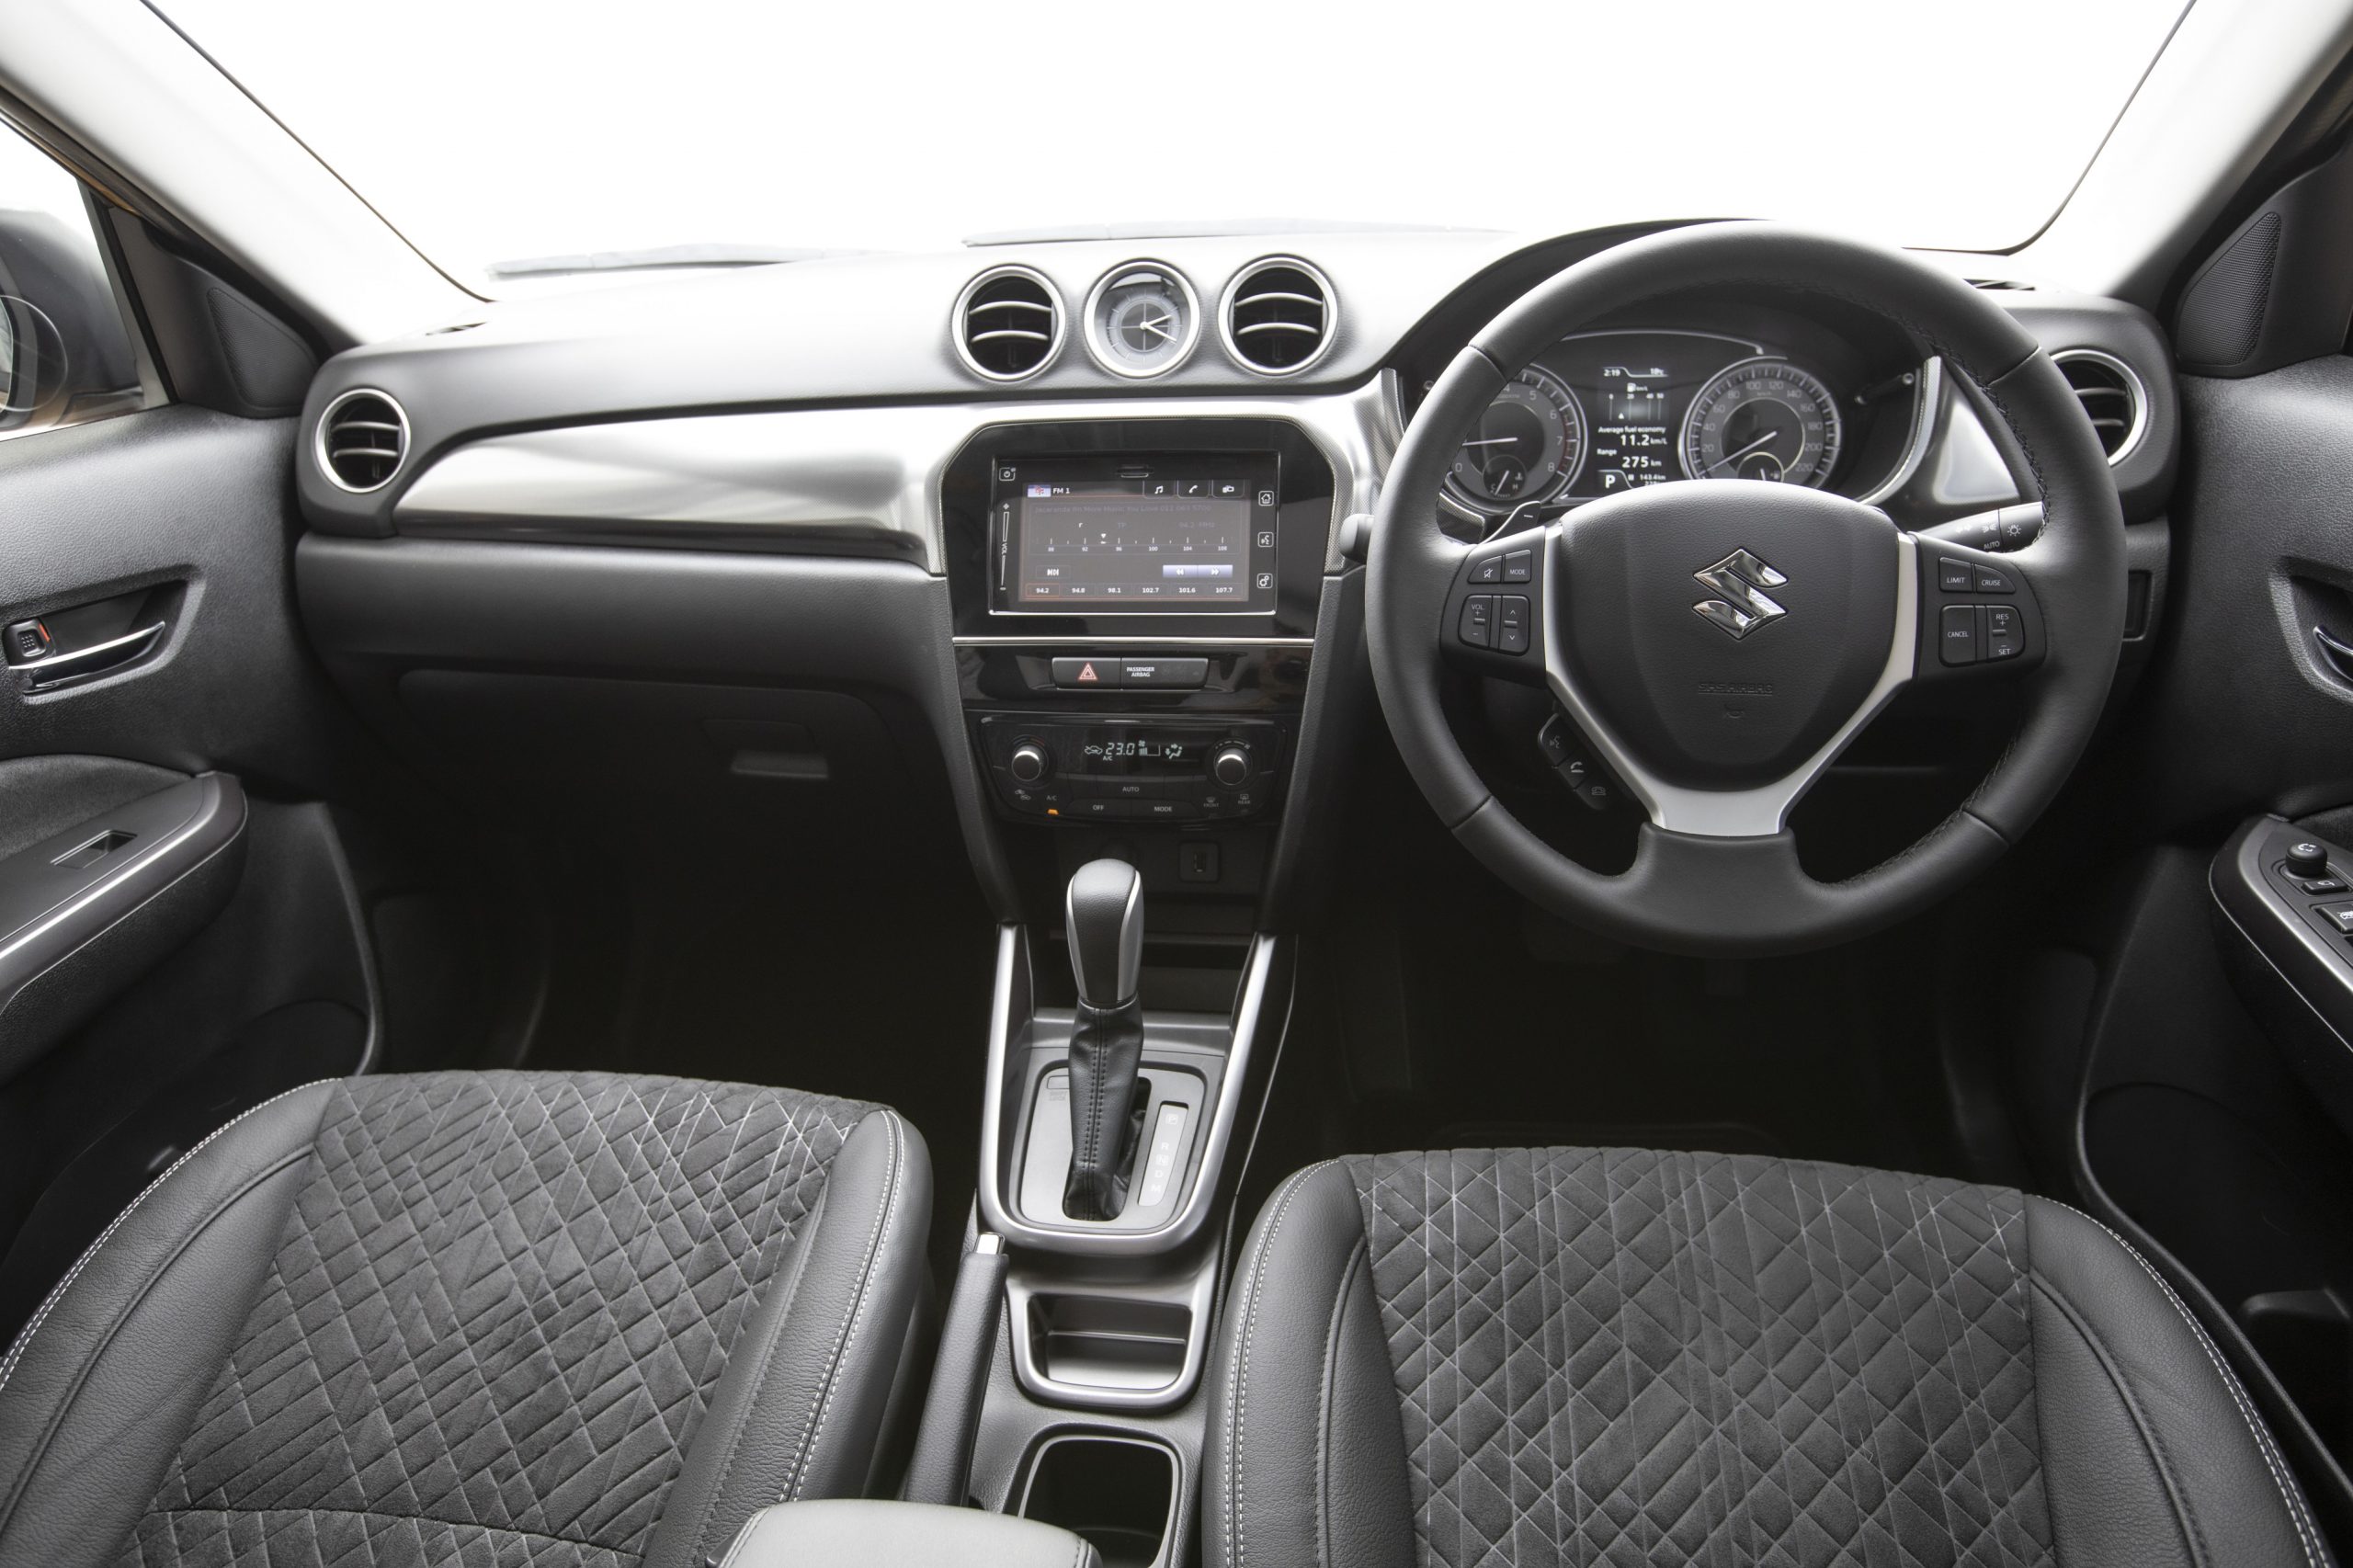 Suzuki | Vitara 1.4 turbo GLX | interior | compact SUV | car review